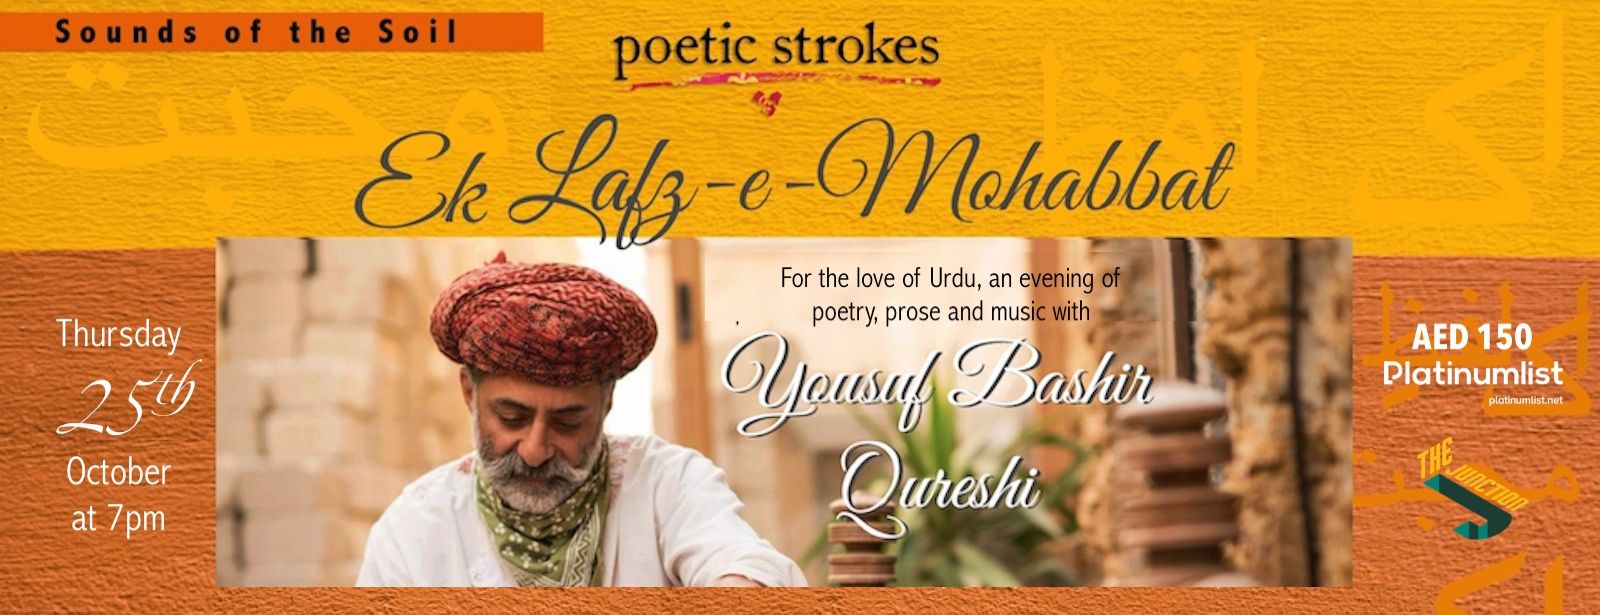 Ek Lafz e Mohabbat – Urdu poetry evening   - Coming Soon in UAE